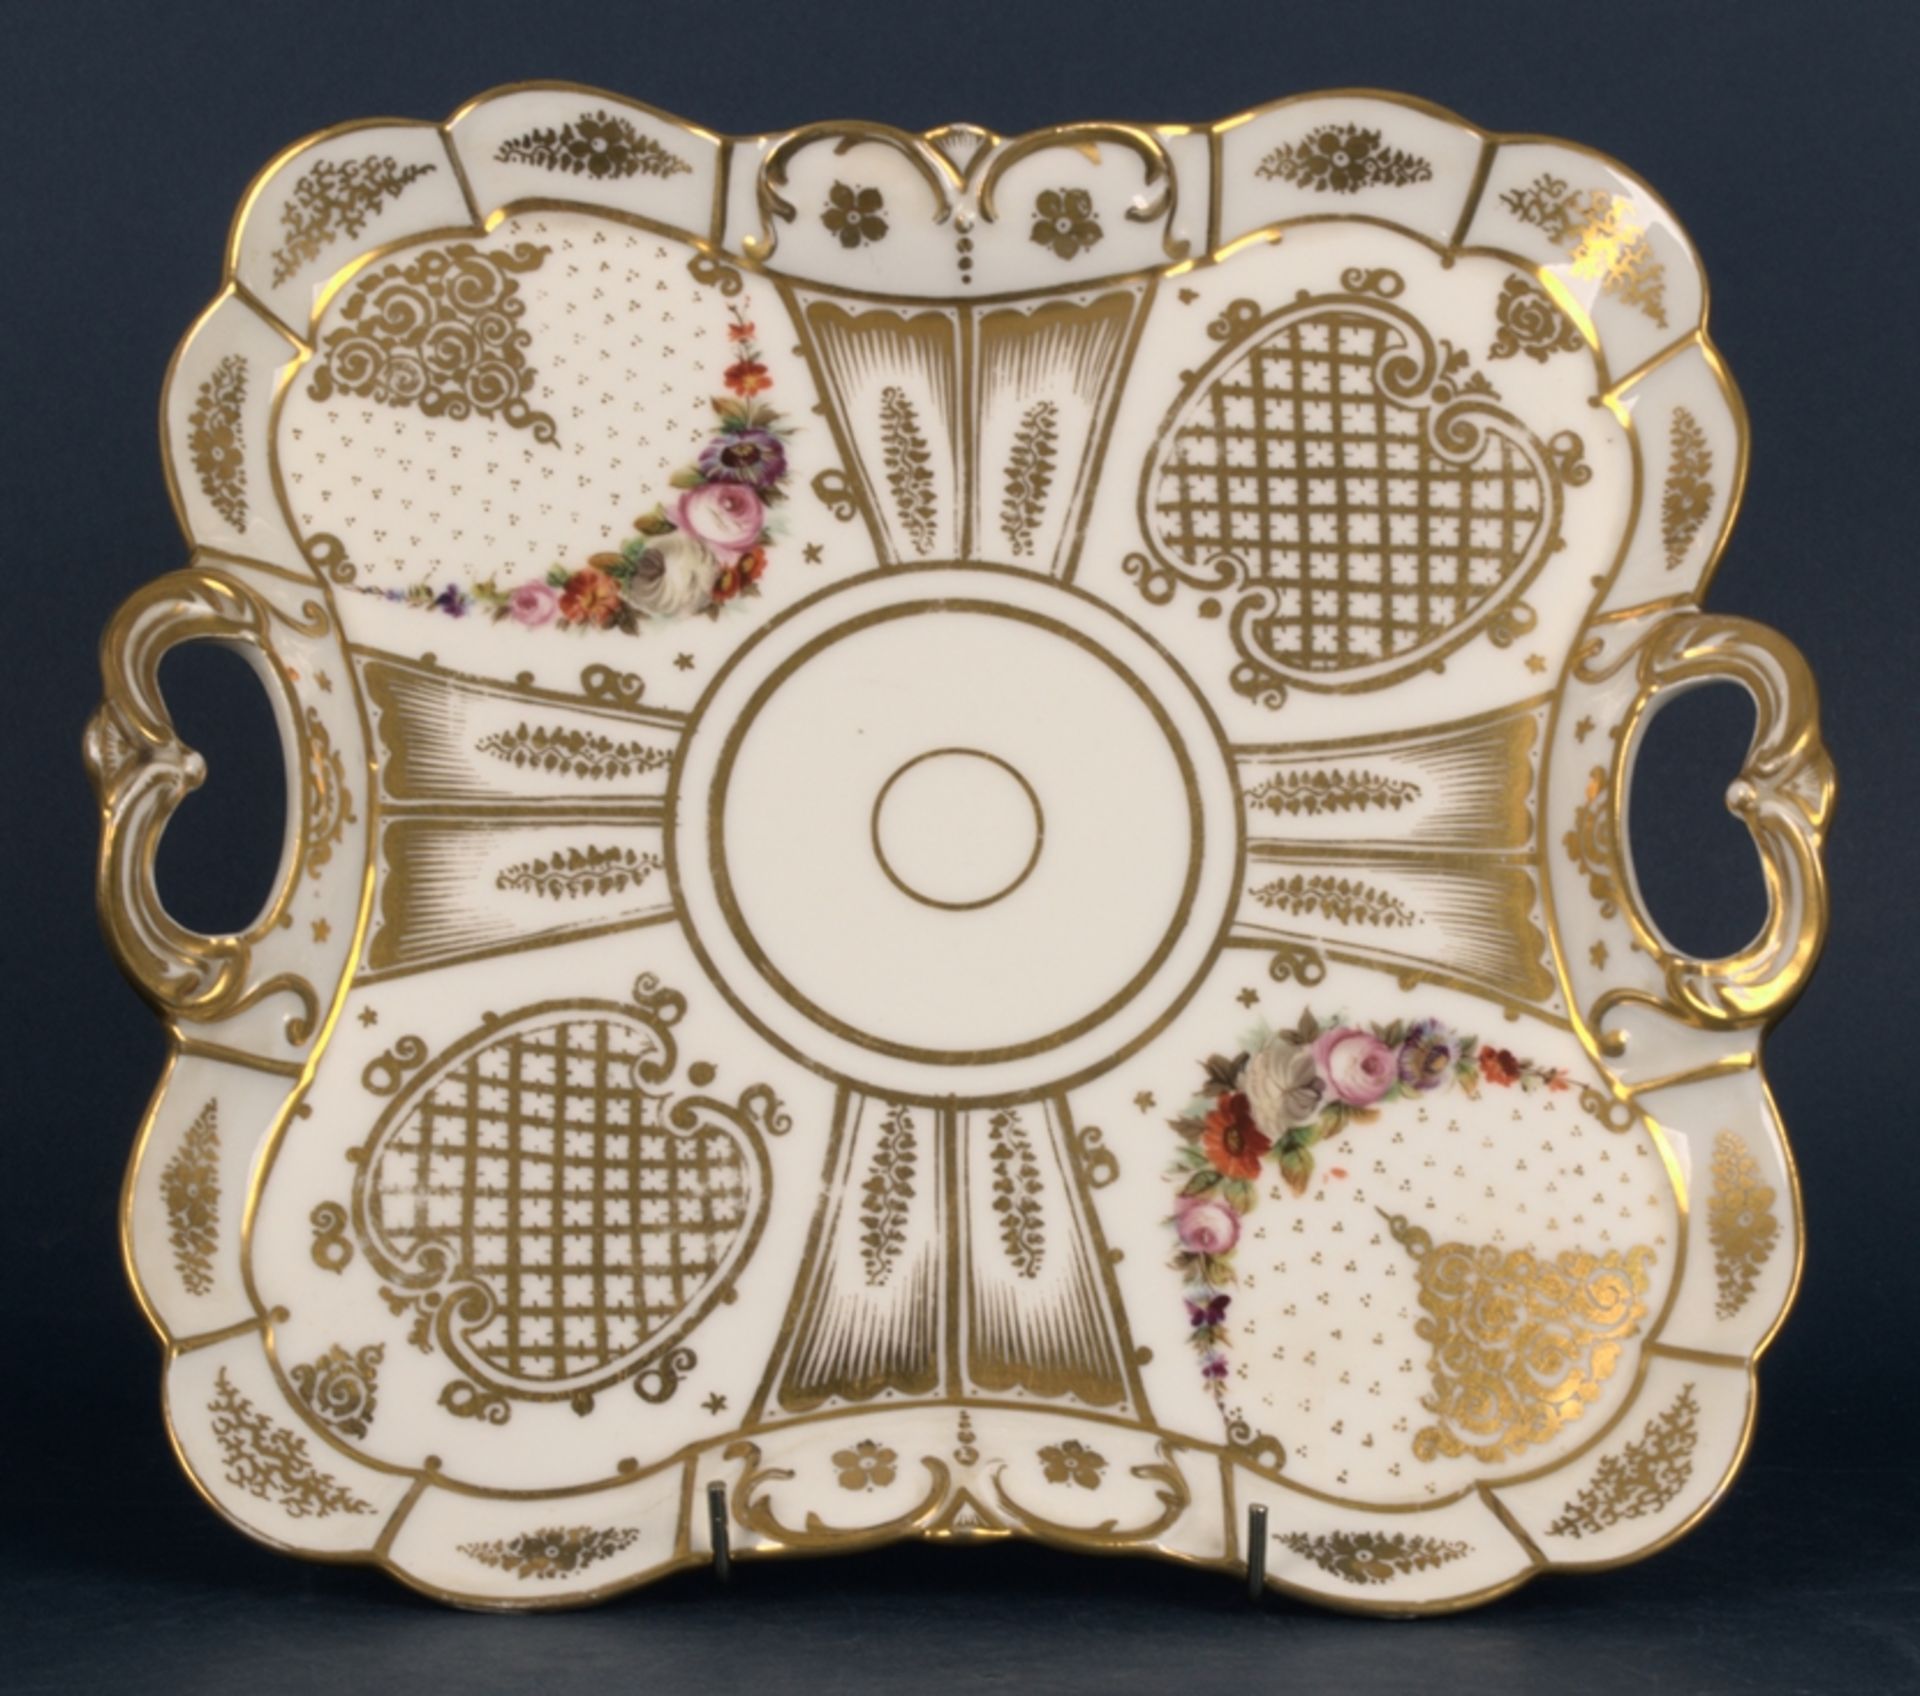 4teiliges Set, ungemarktes Weißporzellan mit polychromem Floral - & üppigem Golddekor; Belle - Image 11 of 16